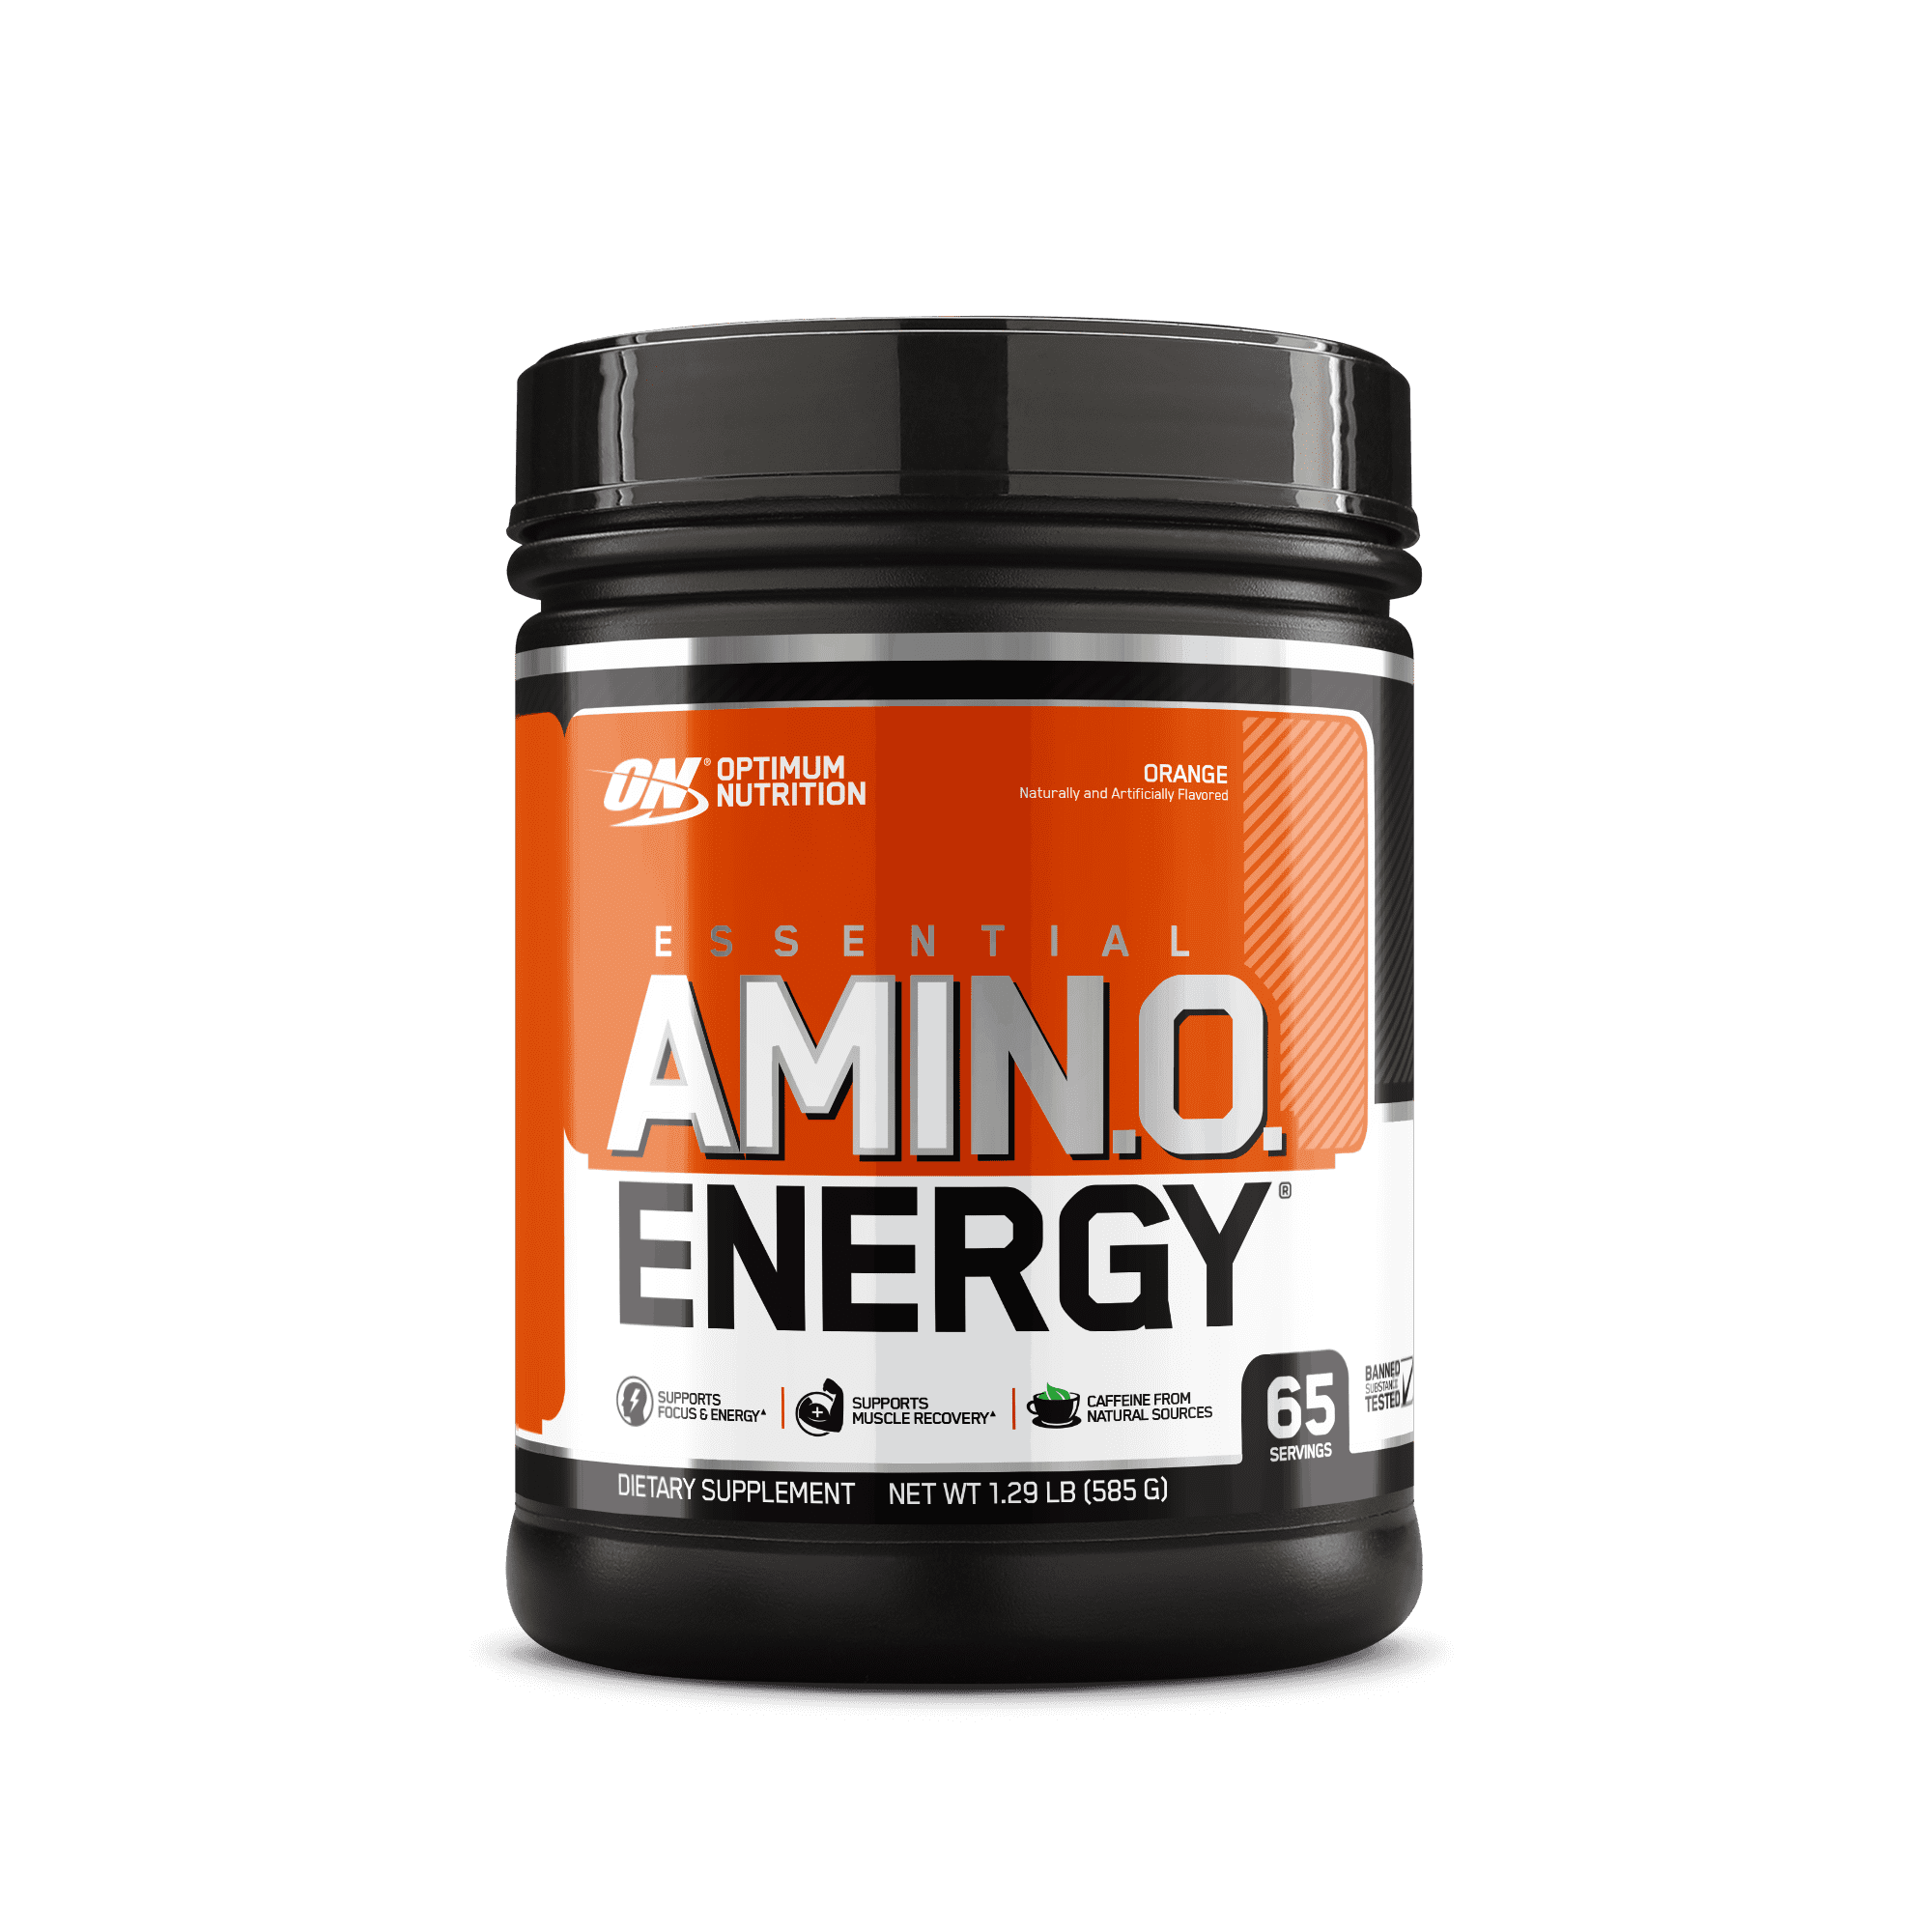 Аминокислоты nutrition. Амино Энерджи. ATECHN Amino Energy 210 г адреналин. Amino Energy Optimum Nutrition состав. On Amino Energy 585 gr.